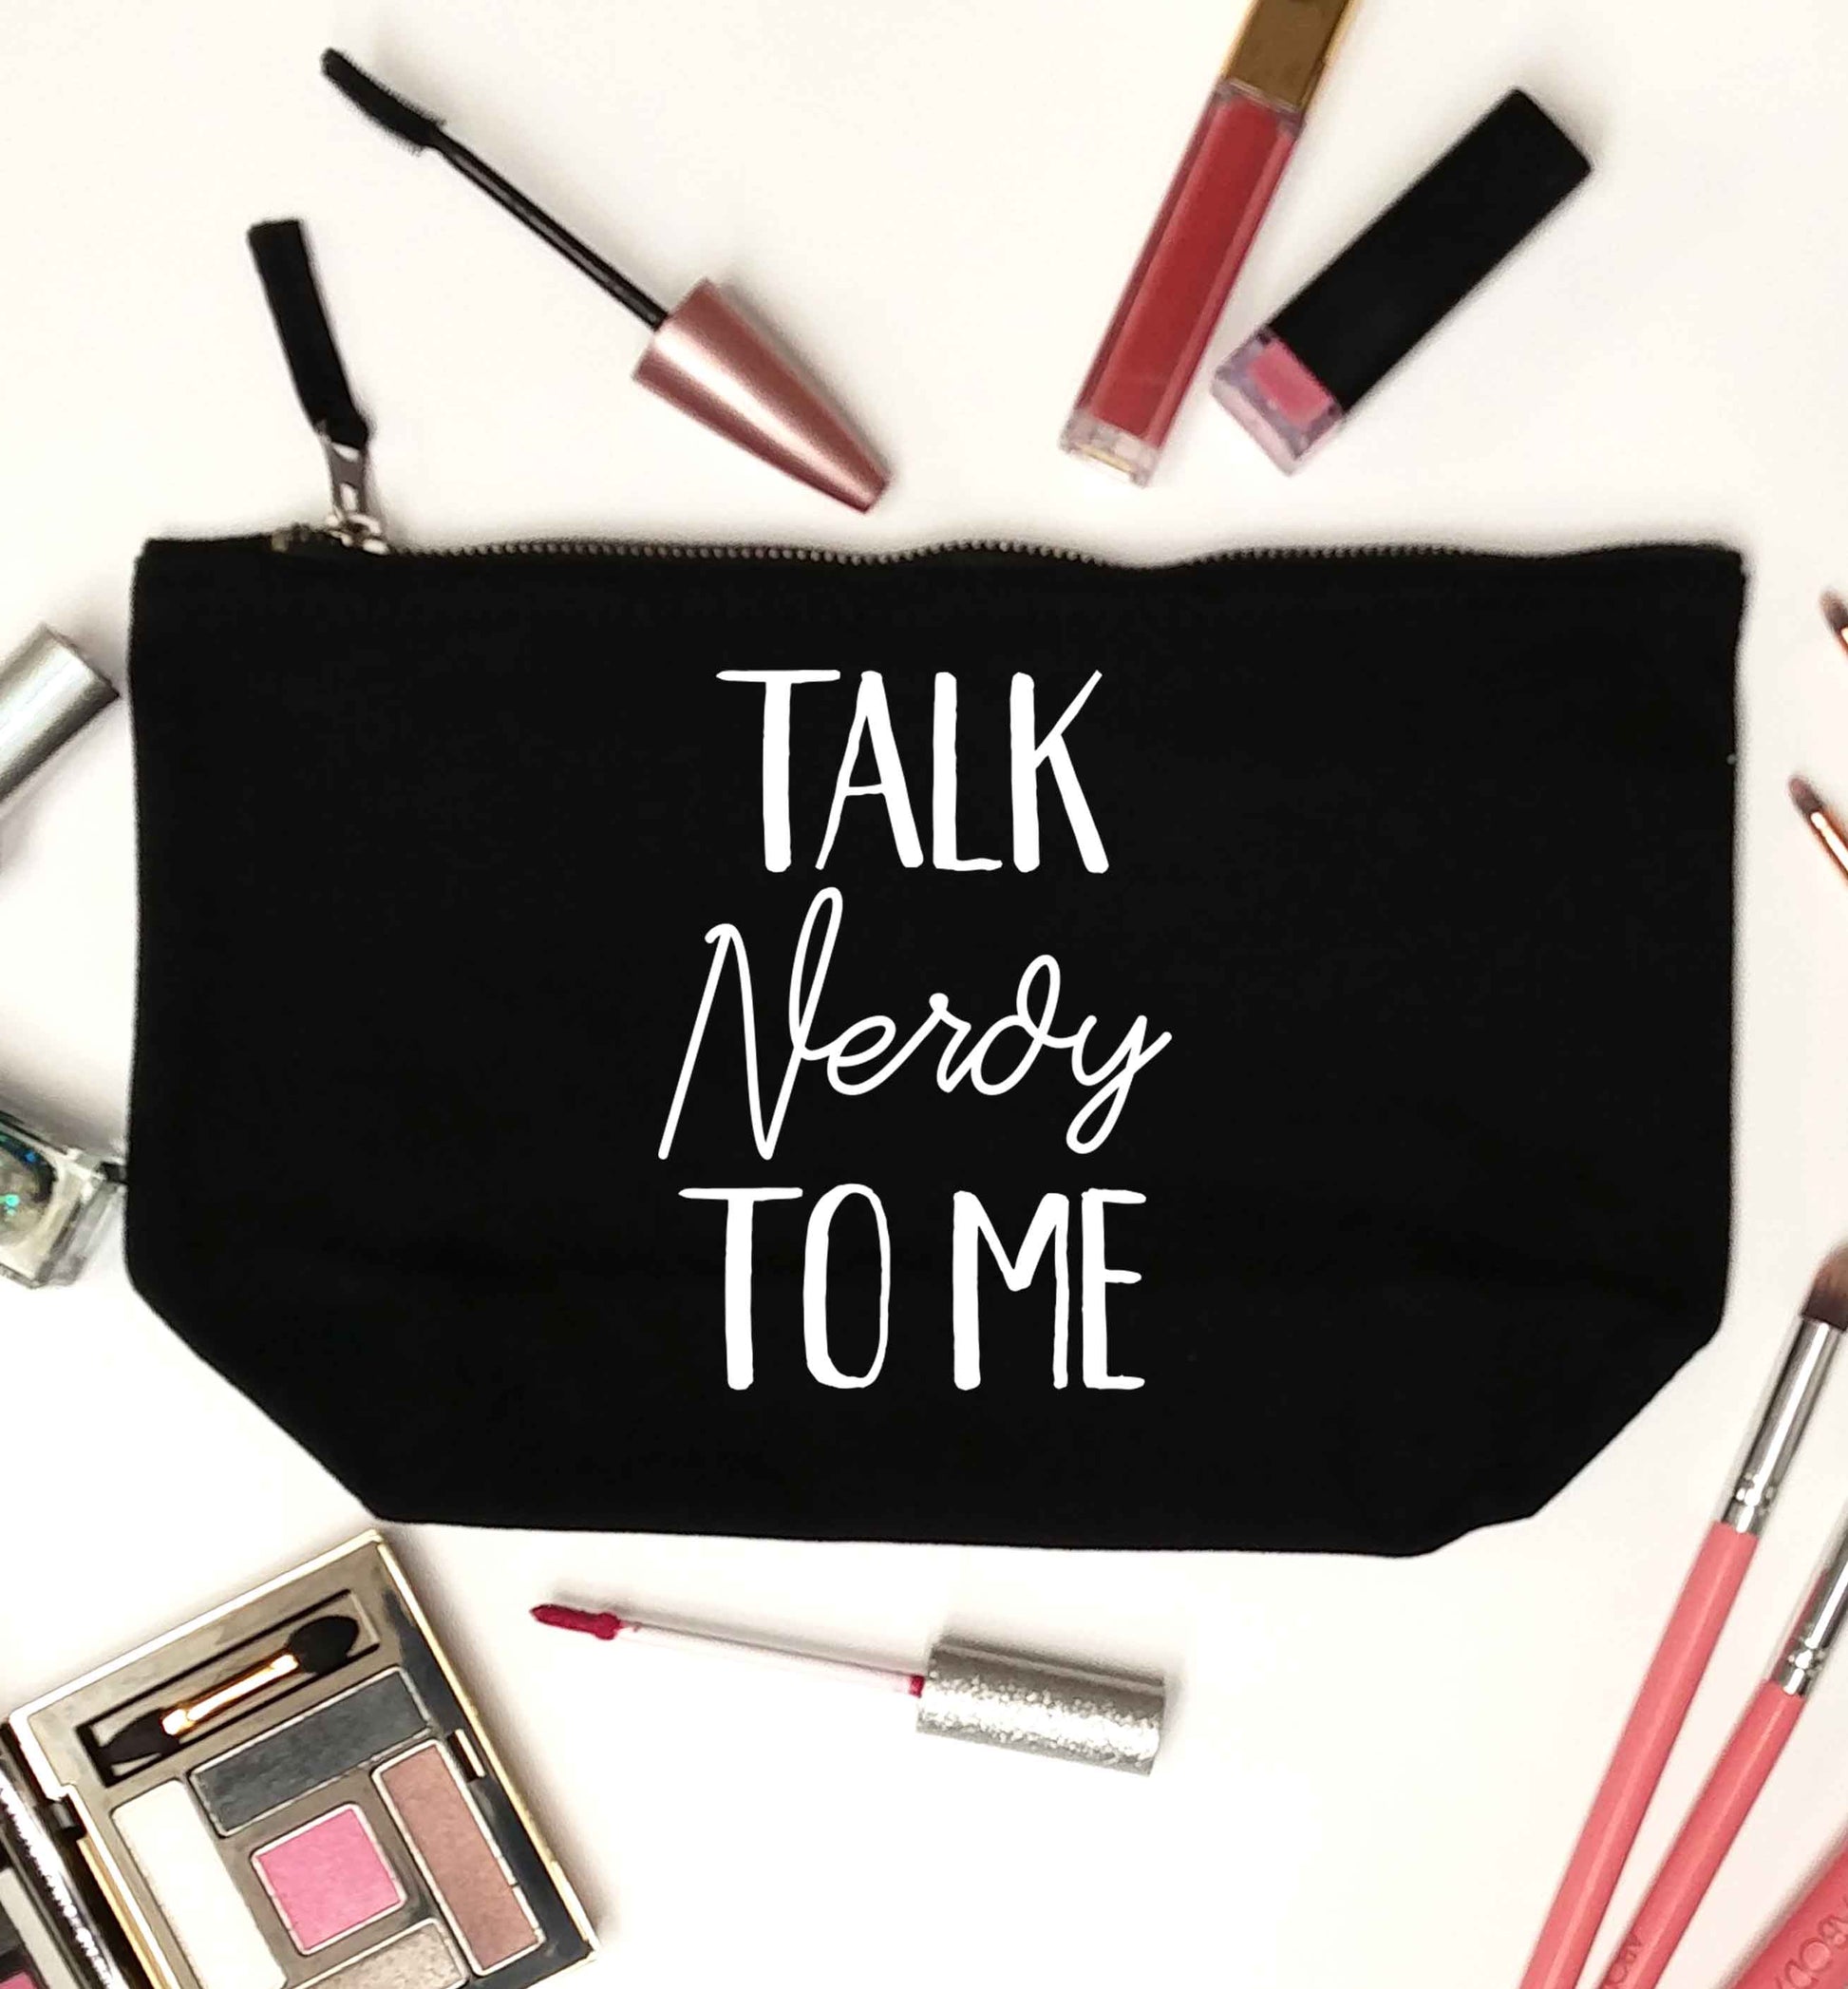 Talk nerdy to me black makeup bag